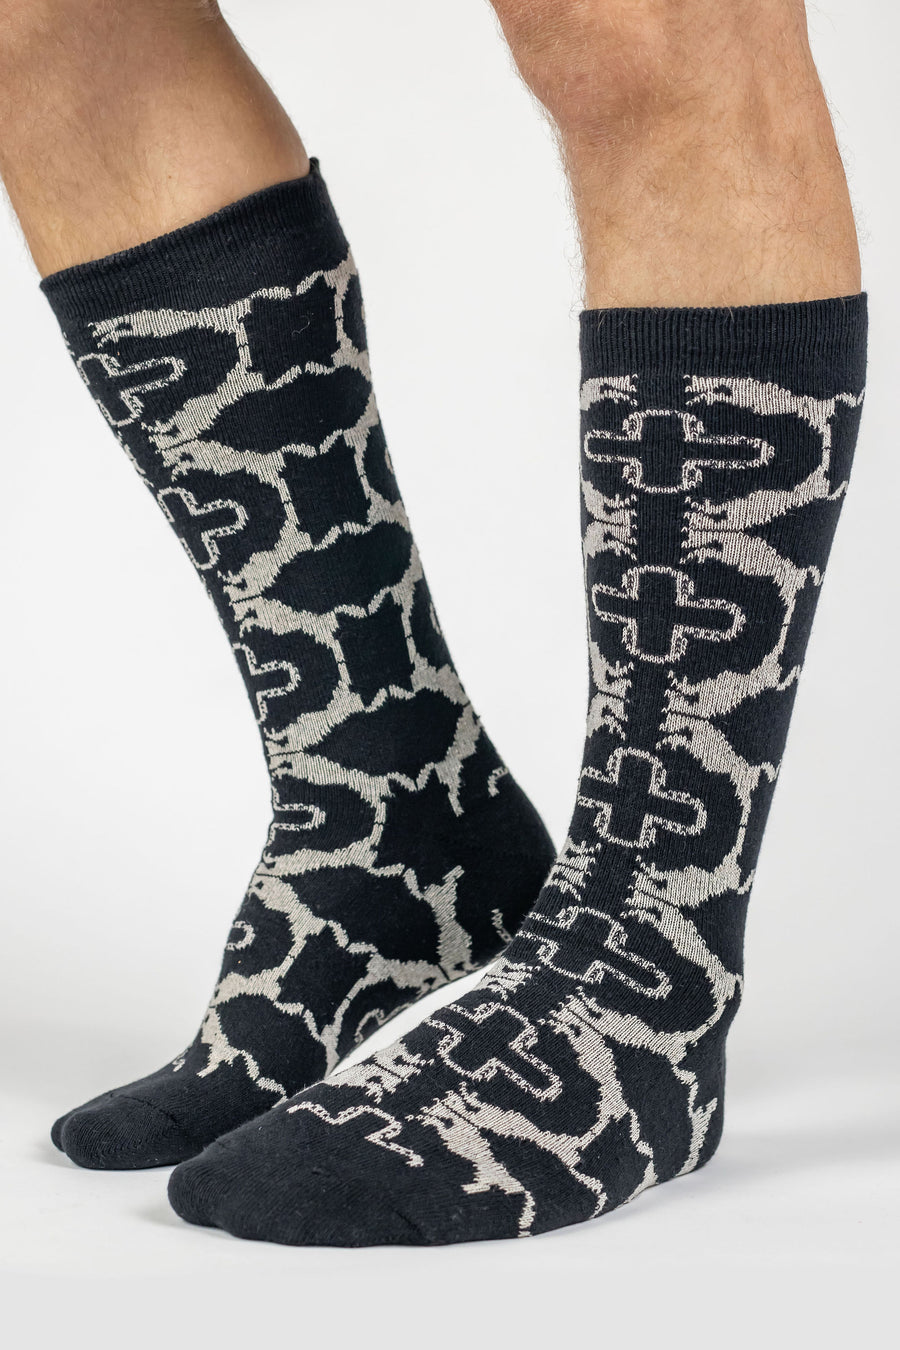 Black Horse and Shoe Men's Socks